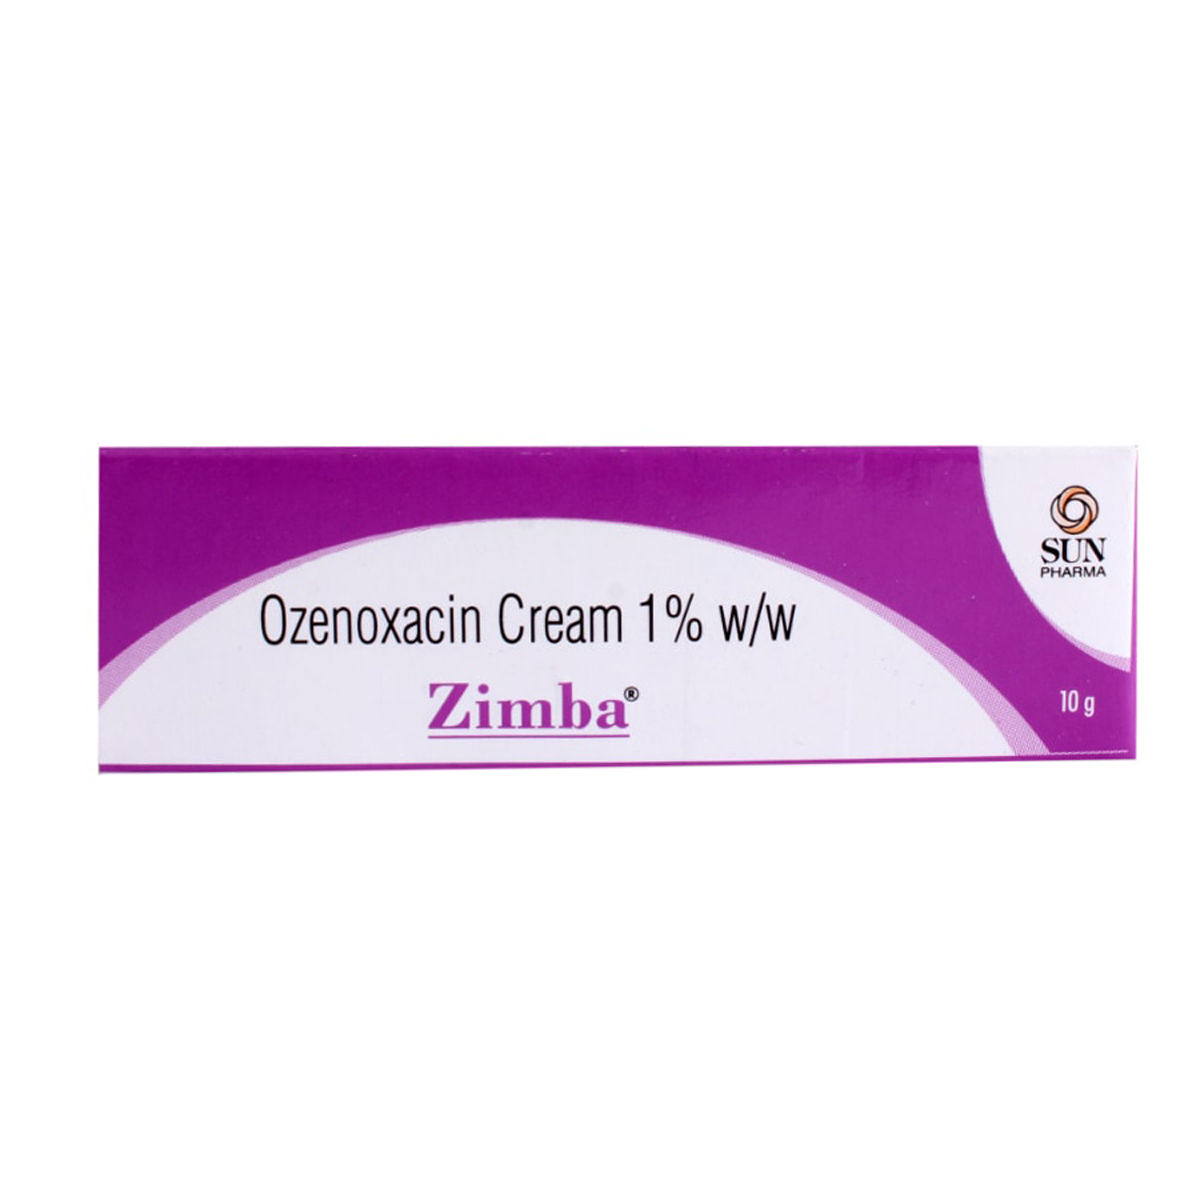 Buy Zimba Cream 10 gm Online